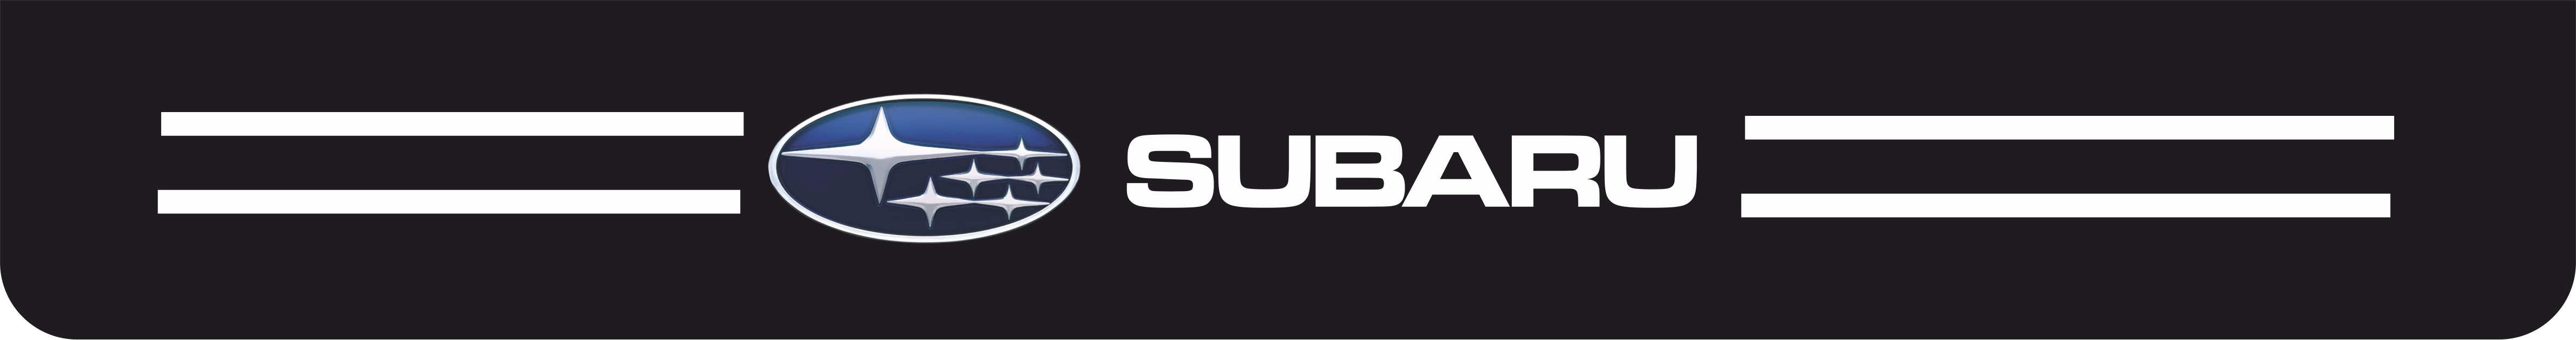 subaru - Subaru kapı eşiği sticker